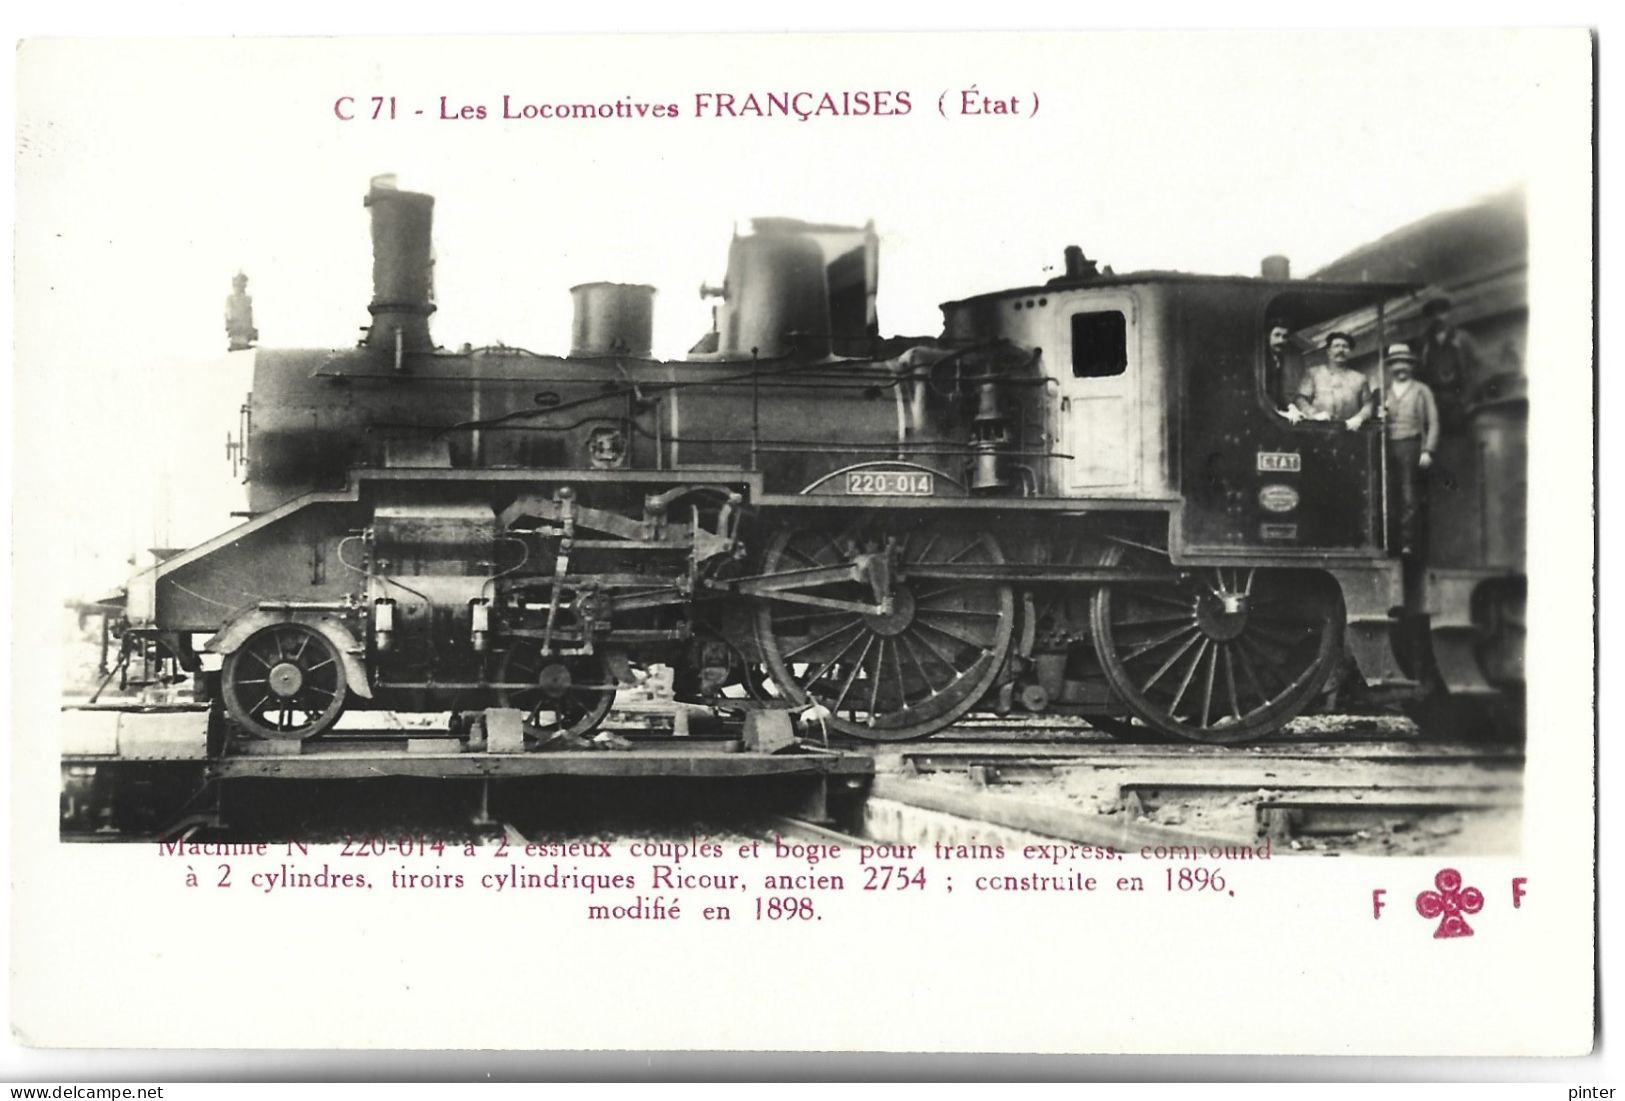 TRAIN - LES LOCOMOTIVES FRANCAISES (Etat) - Machine N° 220-014 - Treni